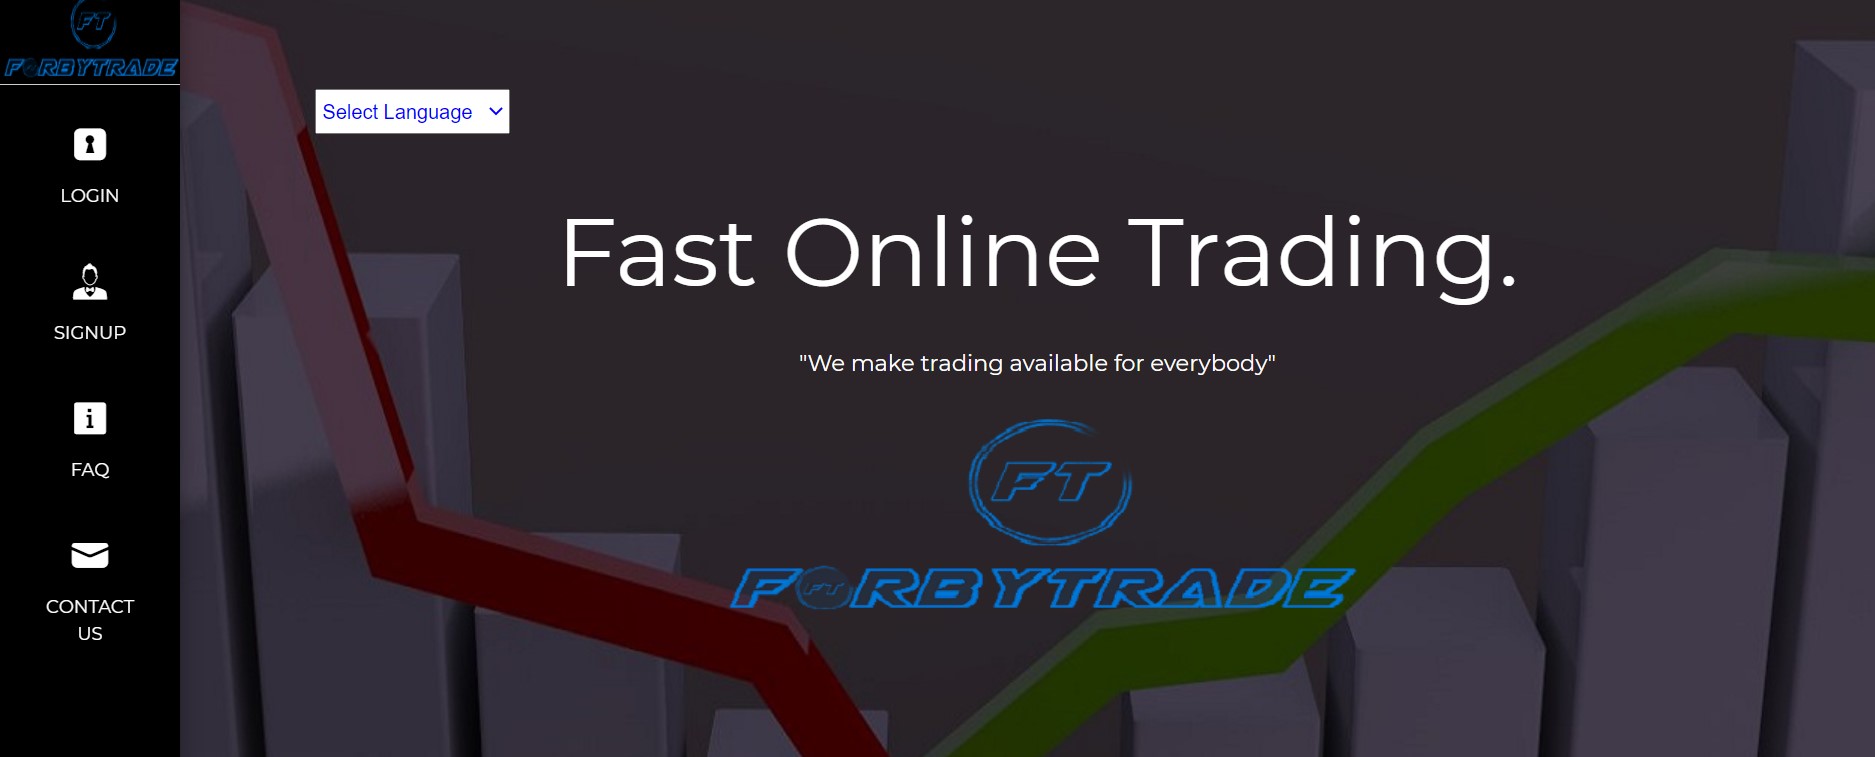 Forbytrade website